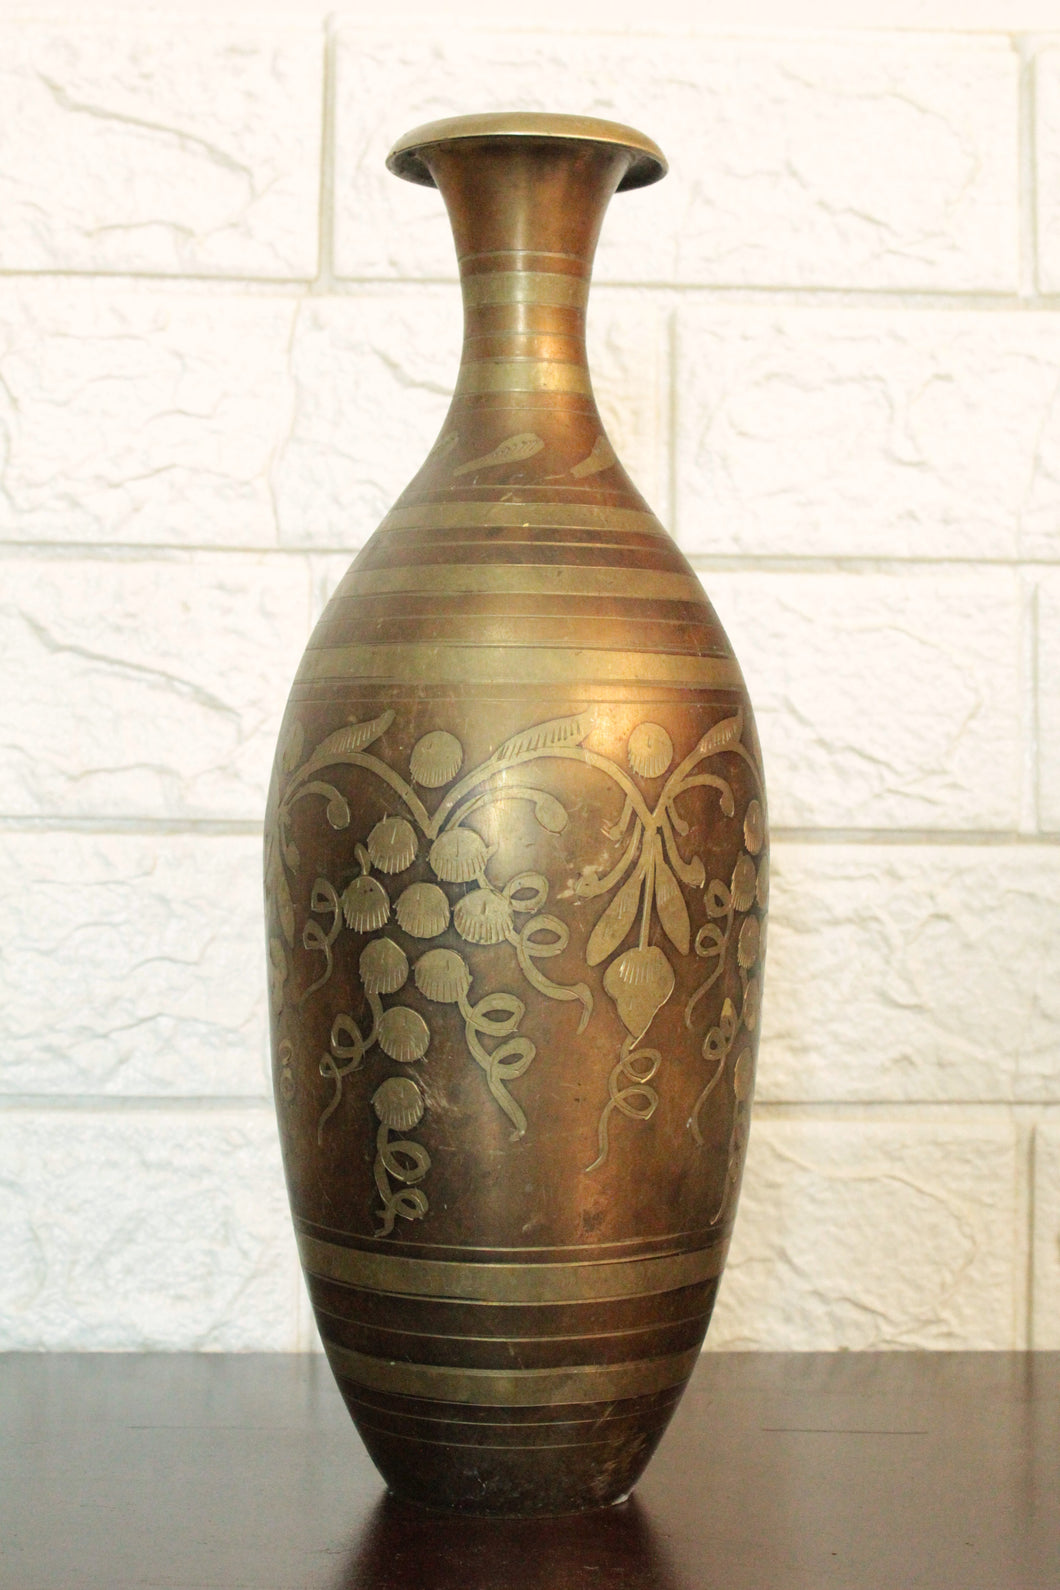 Elegant Vintage Brass Vase - Timeless Beauty for Your Home Decor